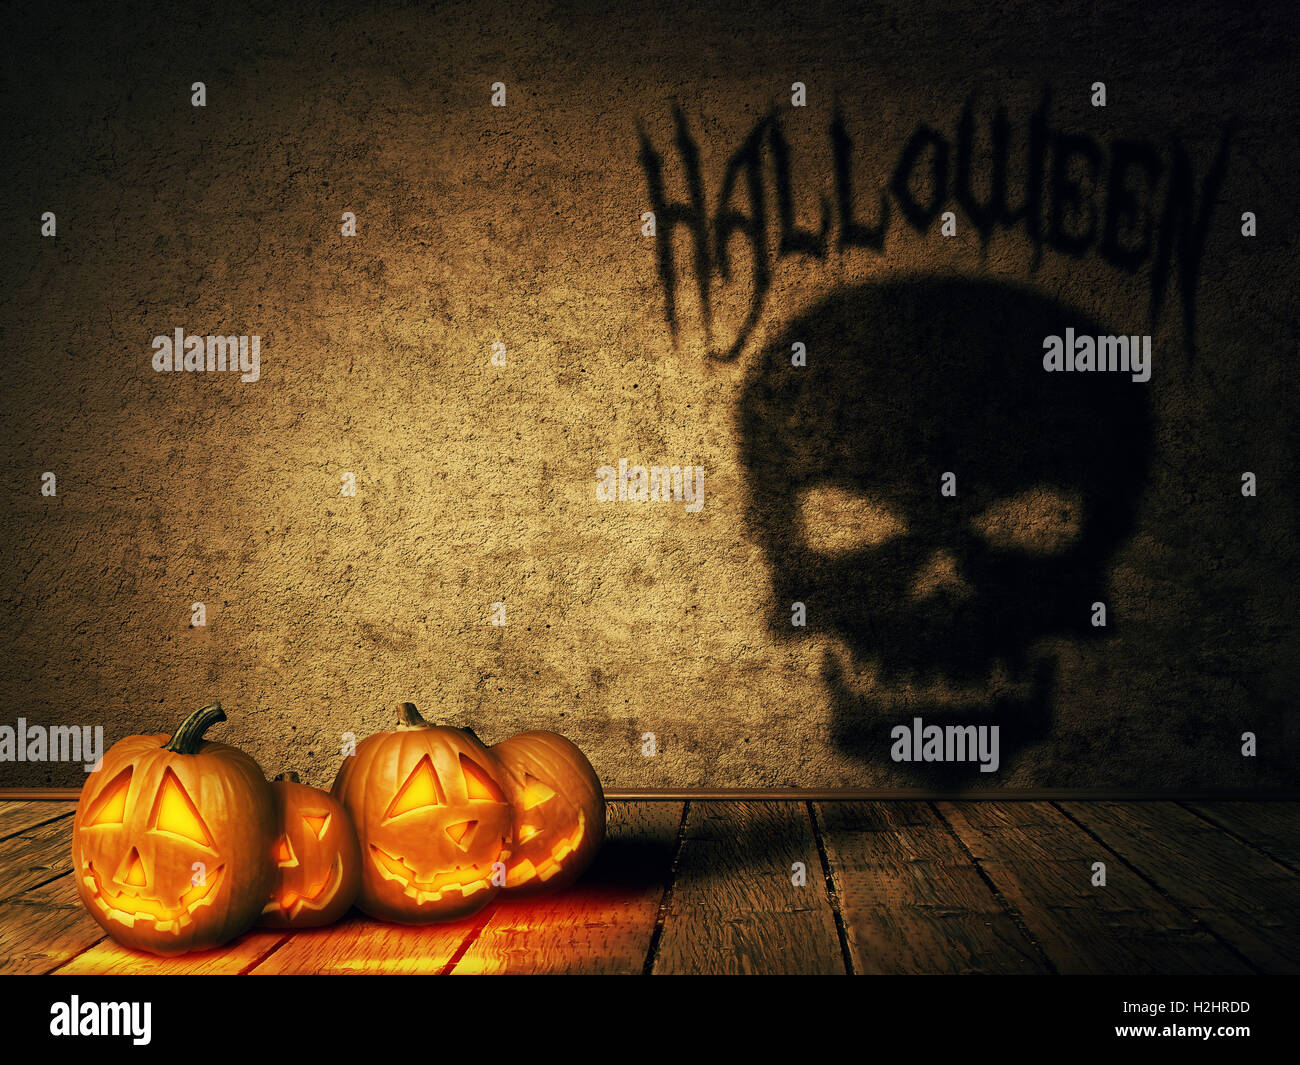 Lot of pumpkins, jack-o'-lantern casting a shadow shaped as a skull. Surreal Halloween celebration concept. Stock Photo